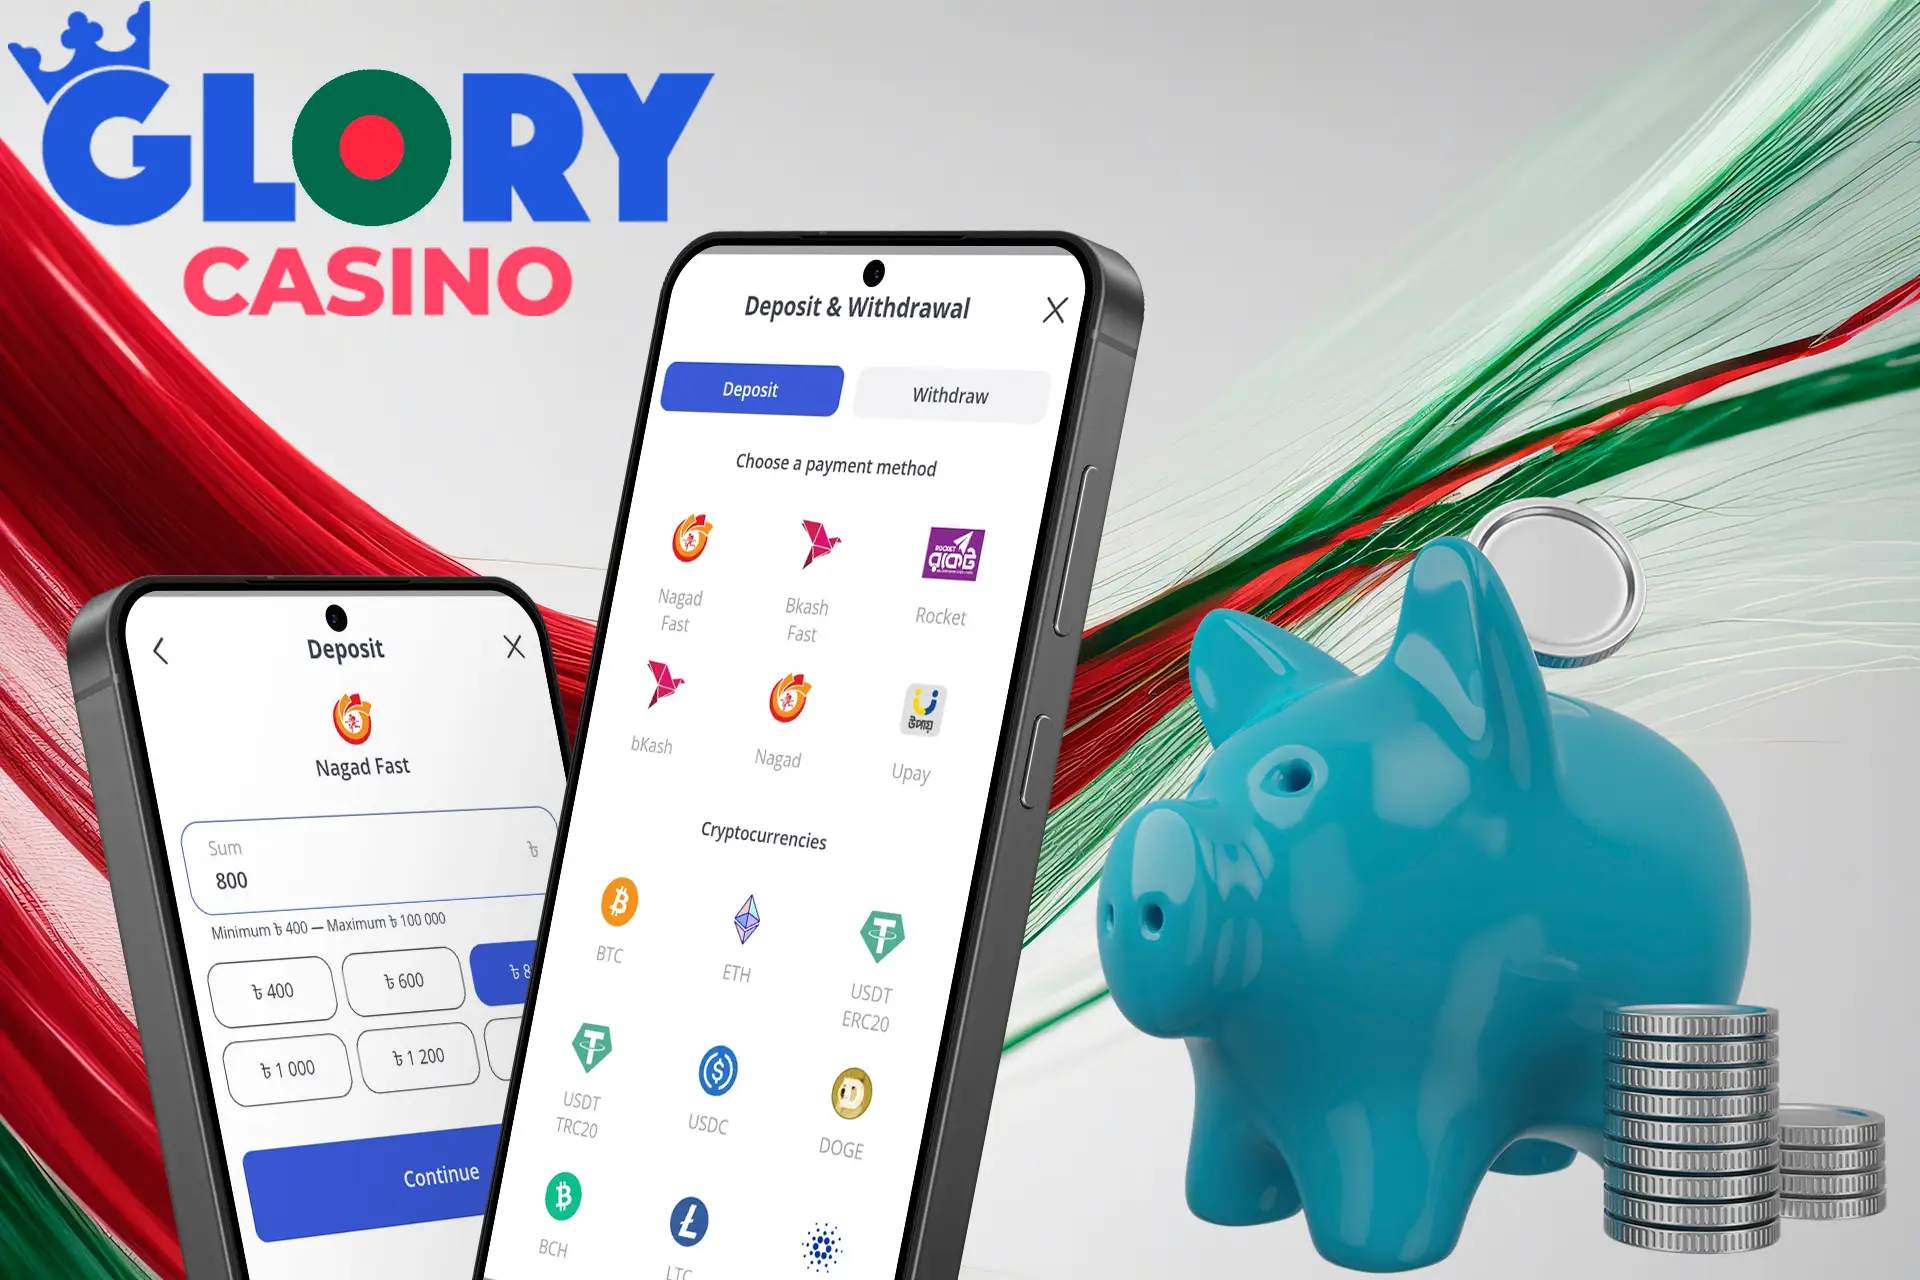 Make your first deposit at Glory Casino Bangladesh